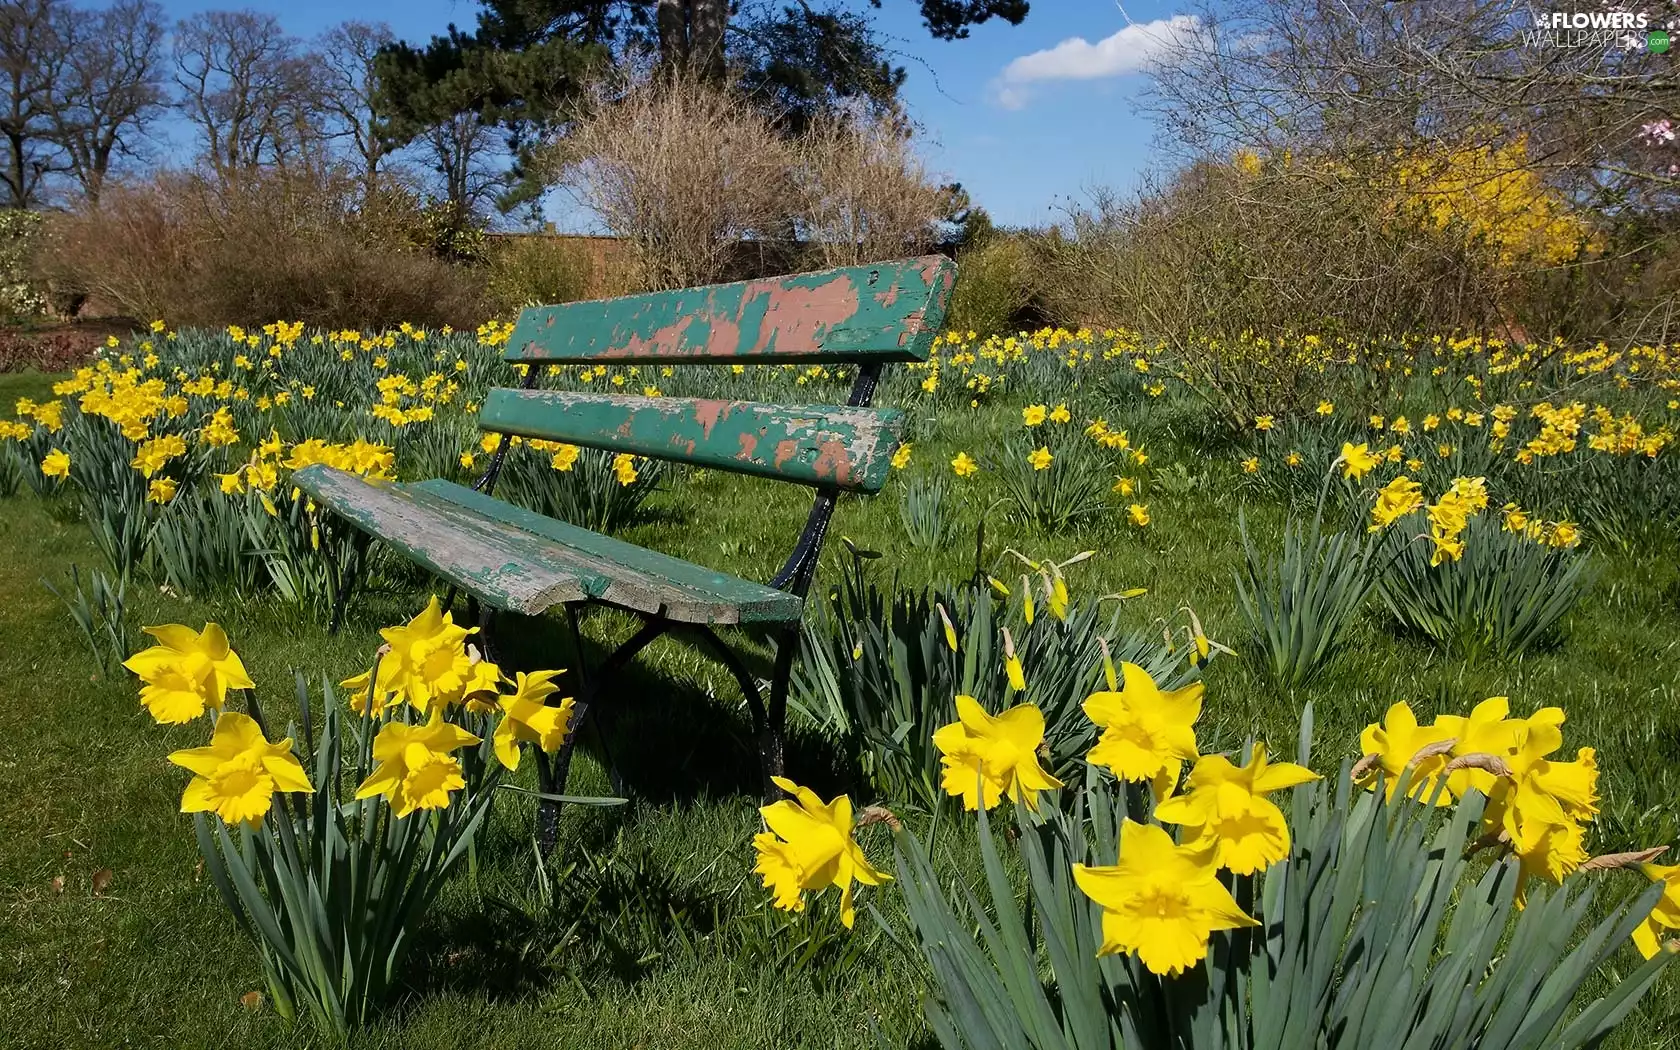 Bench, Daffodils, Garden